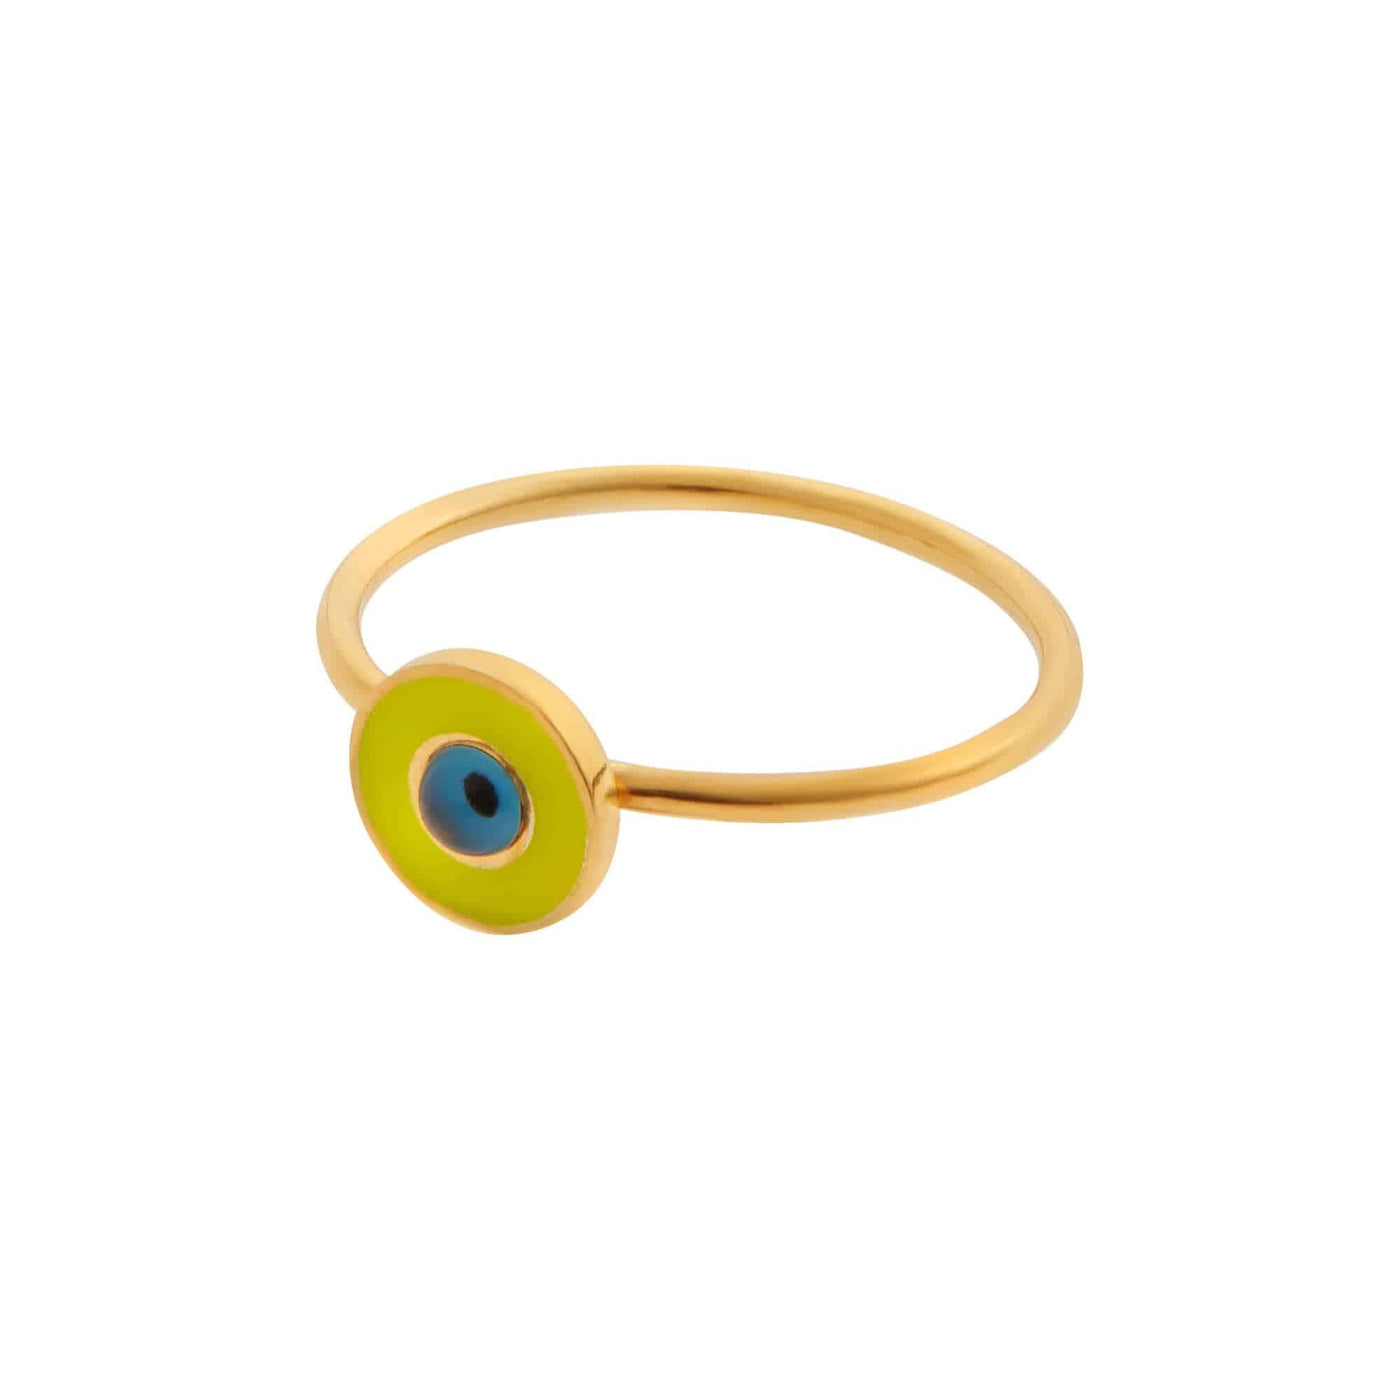 Neon Yellow Eye Ring - Eye M Eyes - Ileana Makri store